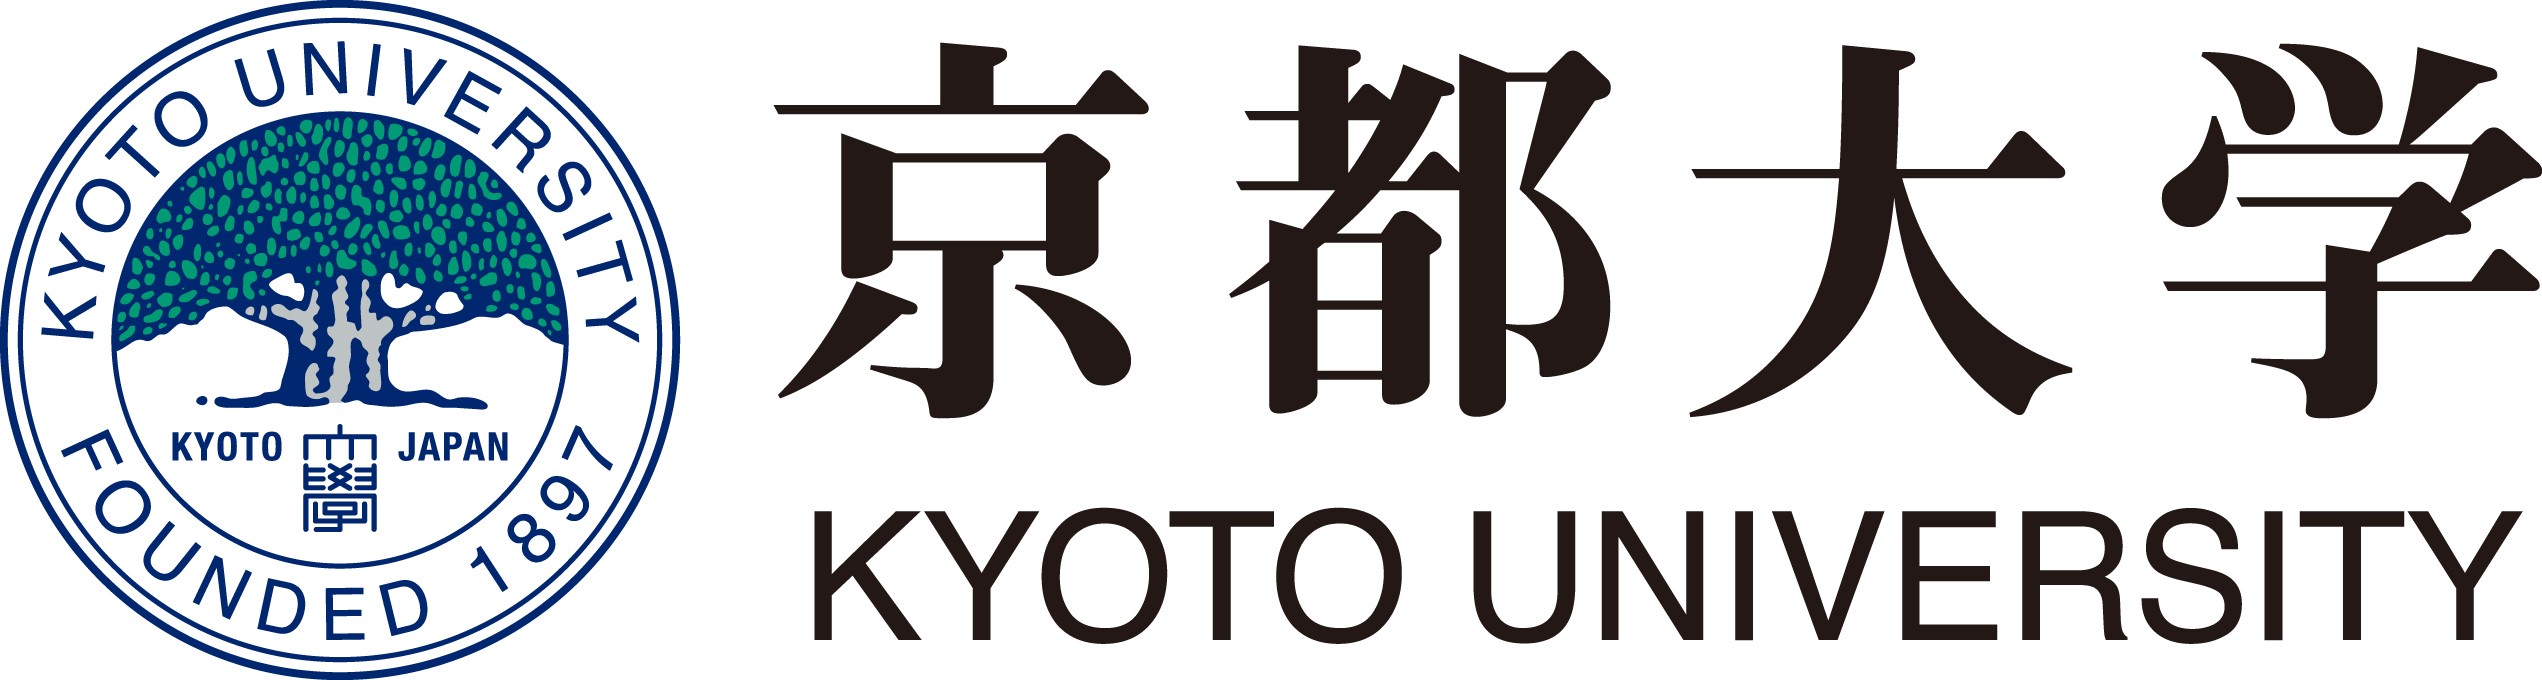 KyotoUniv_logo.jpg